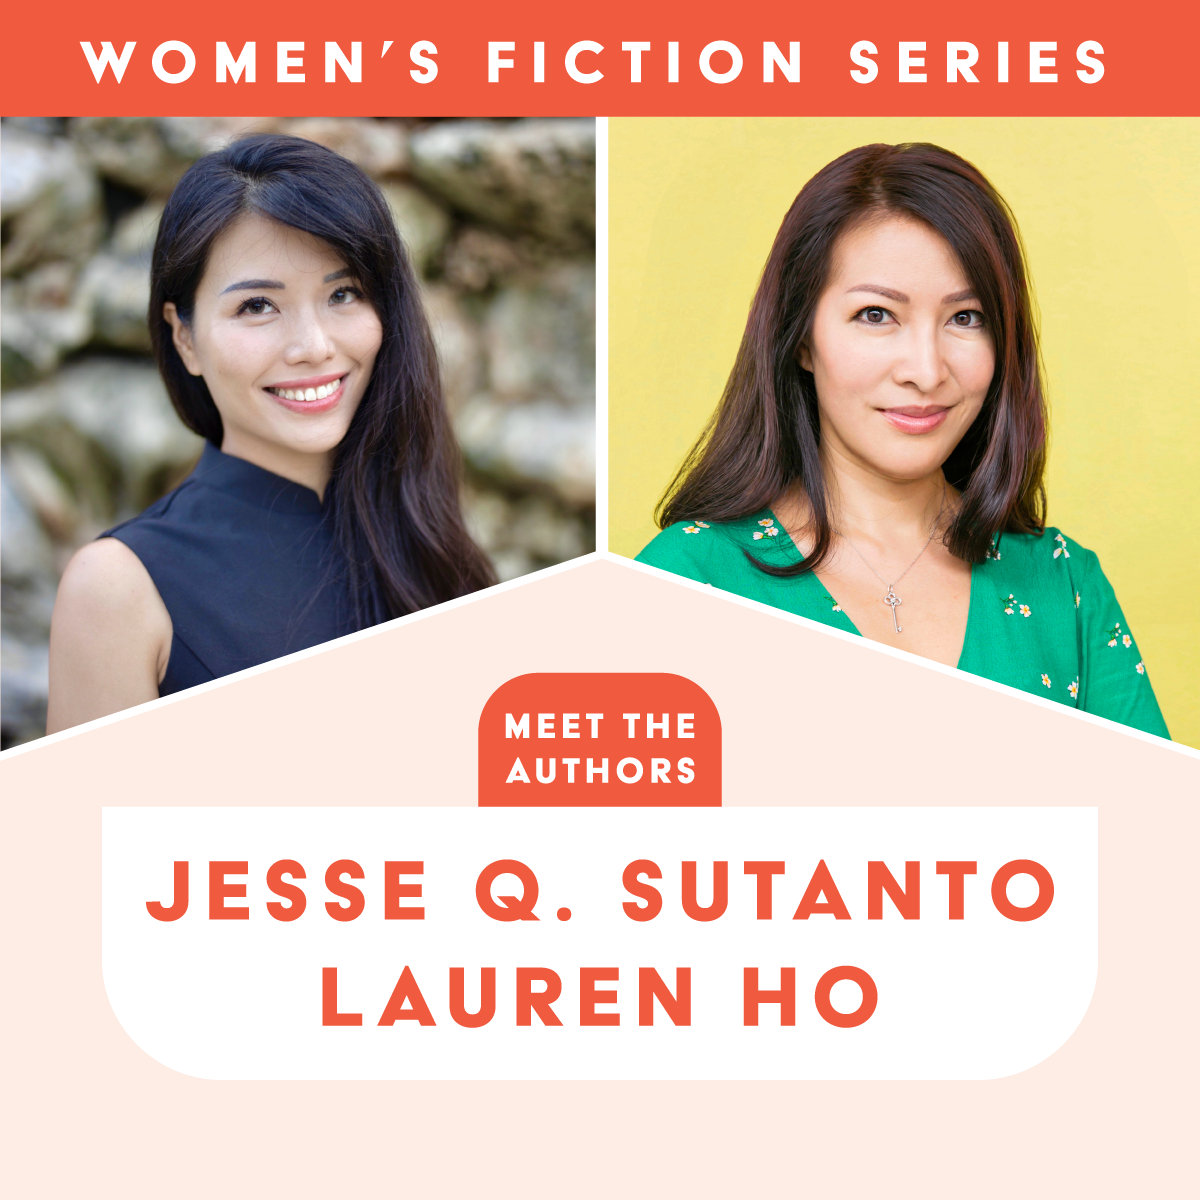 Meet-the-Authors: Jesse Q. Sutanto and Lauren Ho